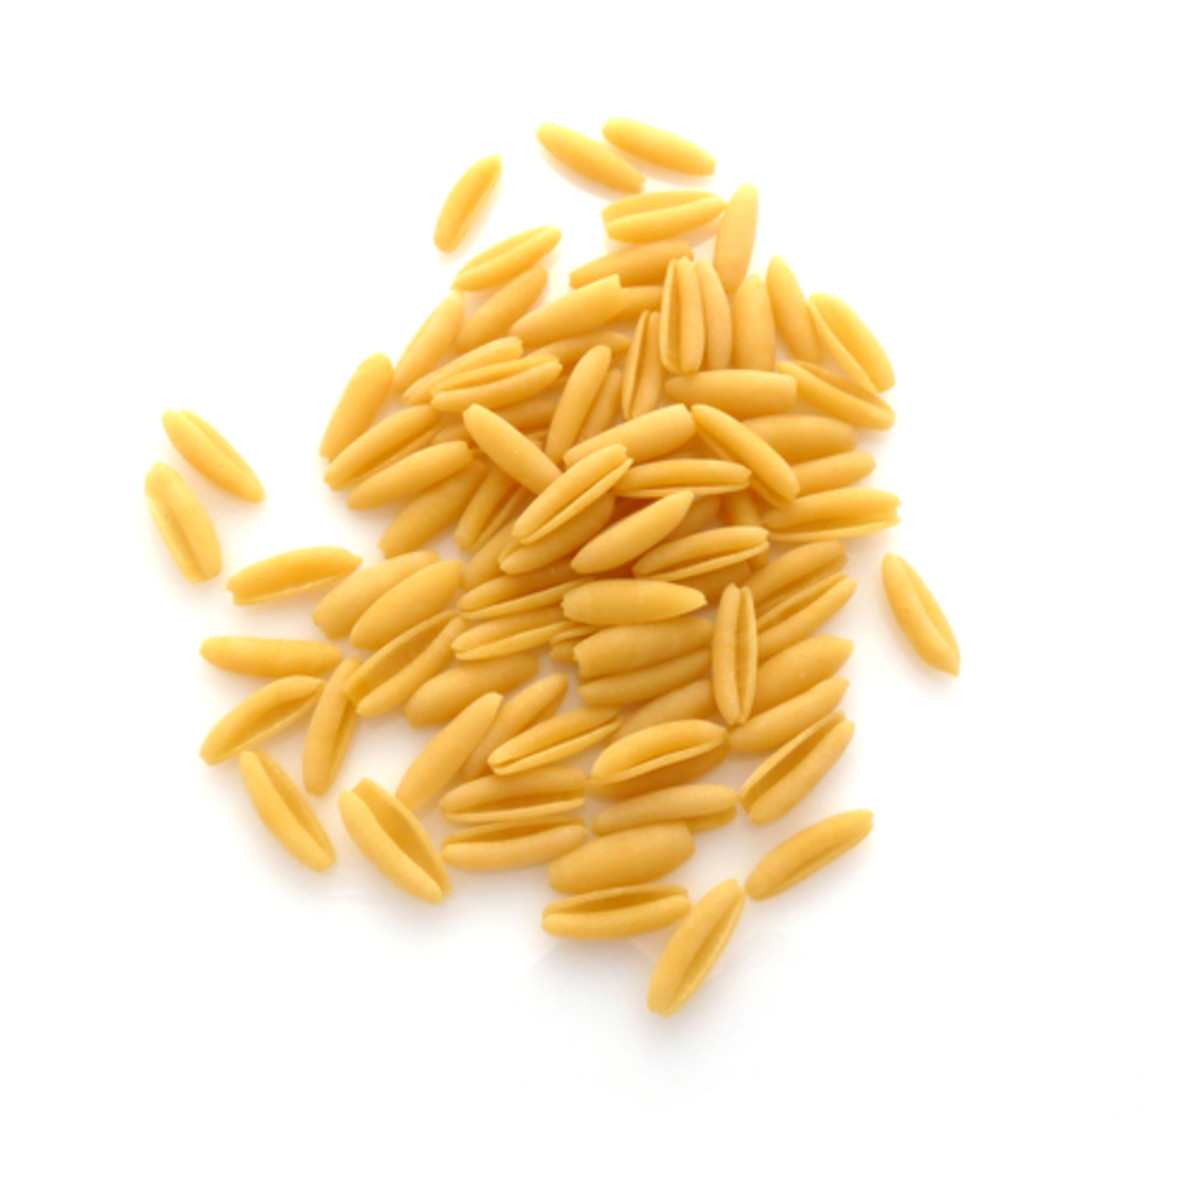 Cavatieddi (aka Cavatelli) - a Pugliese pasta Image:  lorenzo_graph|Shutterstock.com 